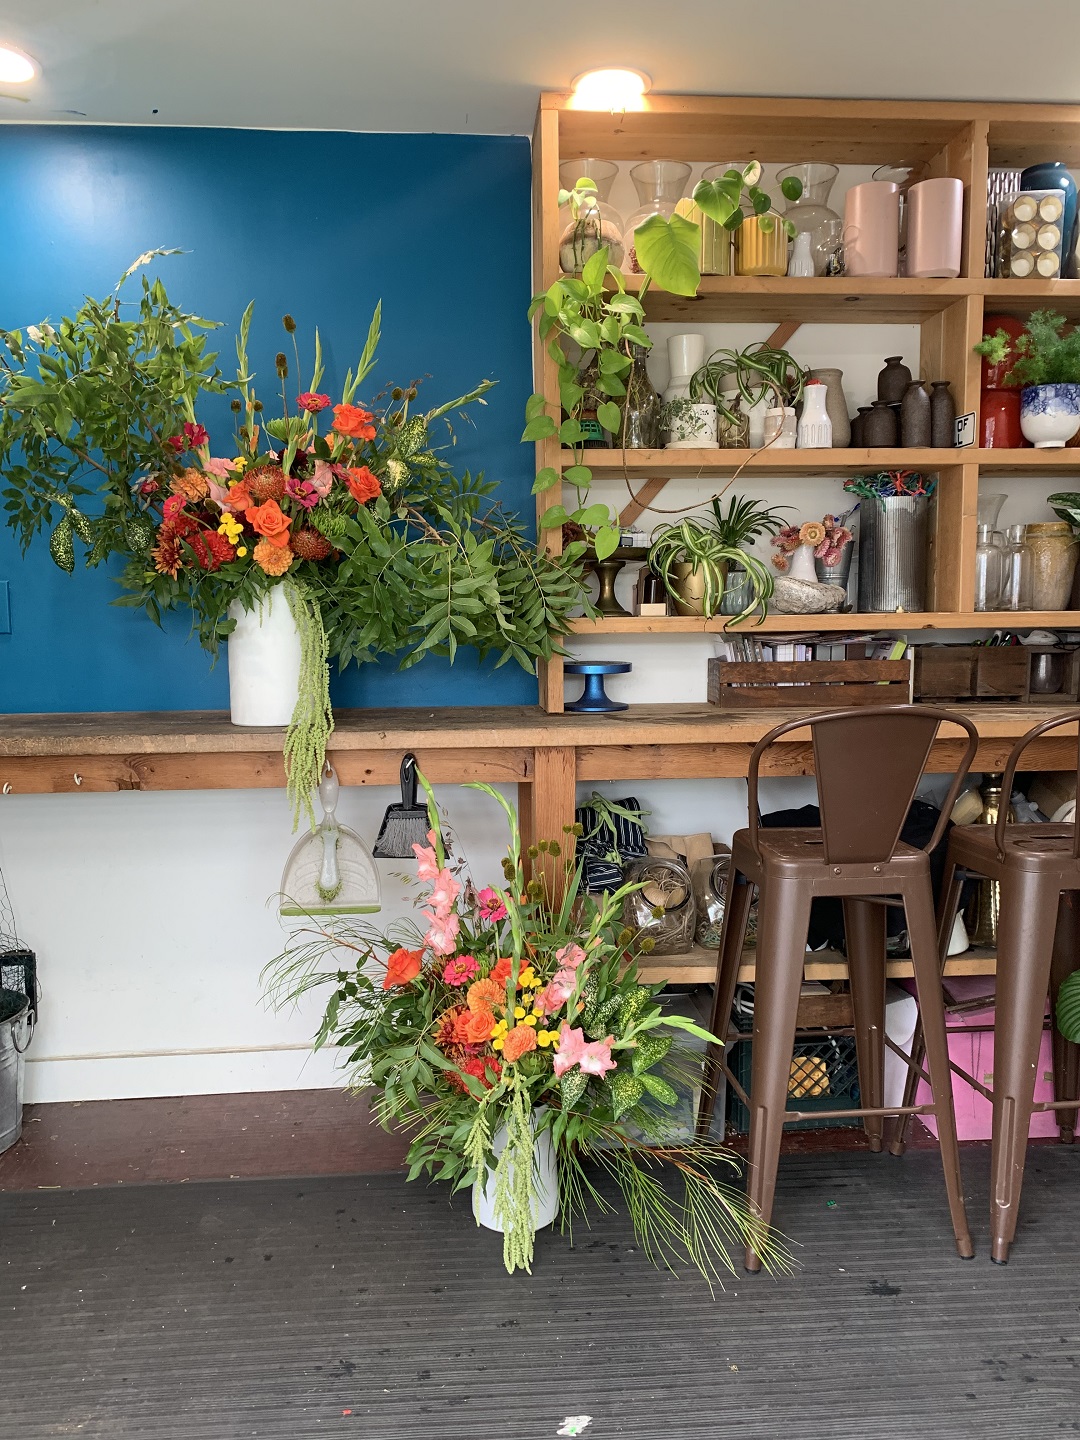 Inside the flower shop